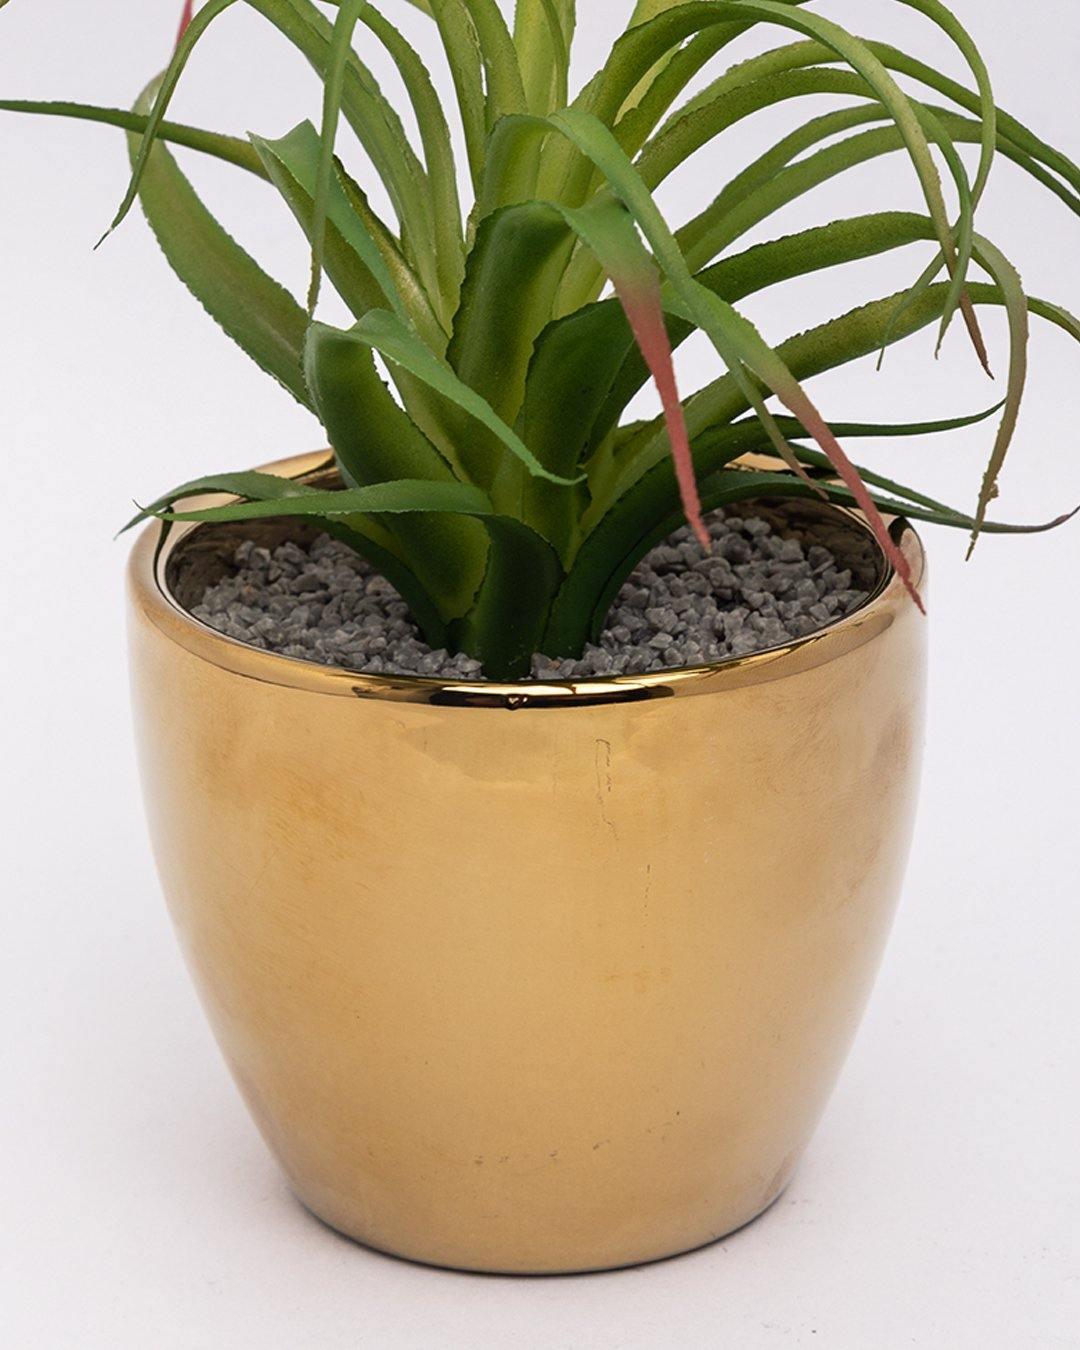 Market99 Artificial Flower with Pot, Green, Plastic & Ceramic - MARKET 99